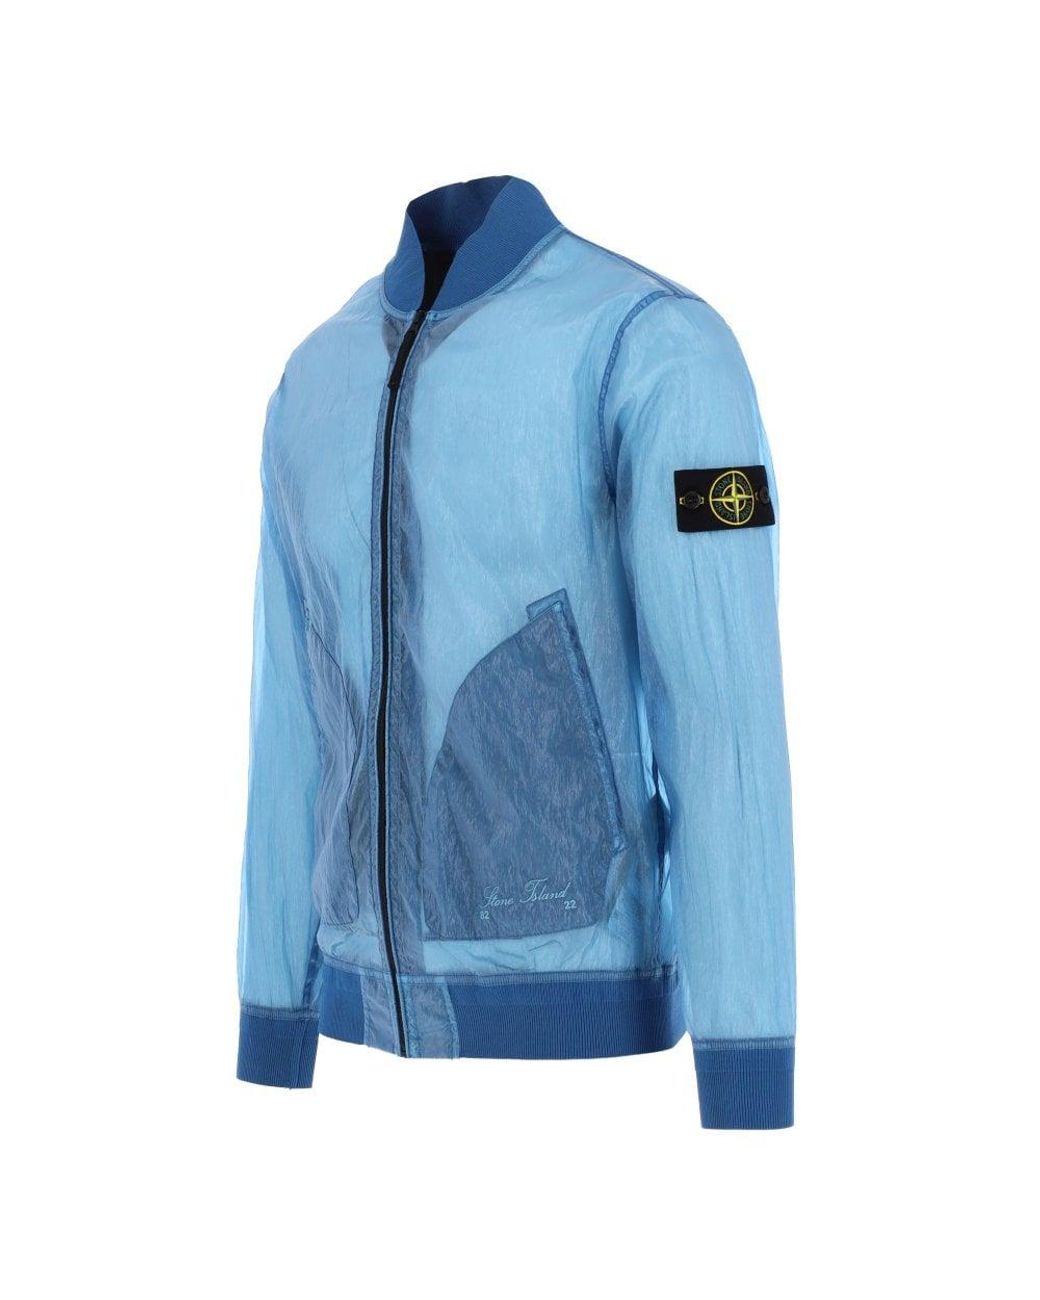 Stone Island Piattina 82/22 Jacket in Blue for Men | Lyst